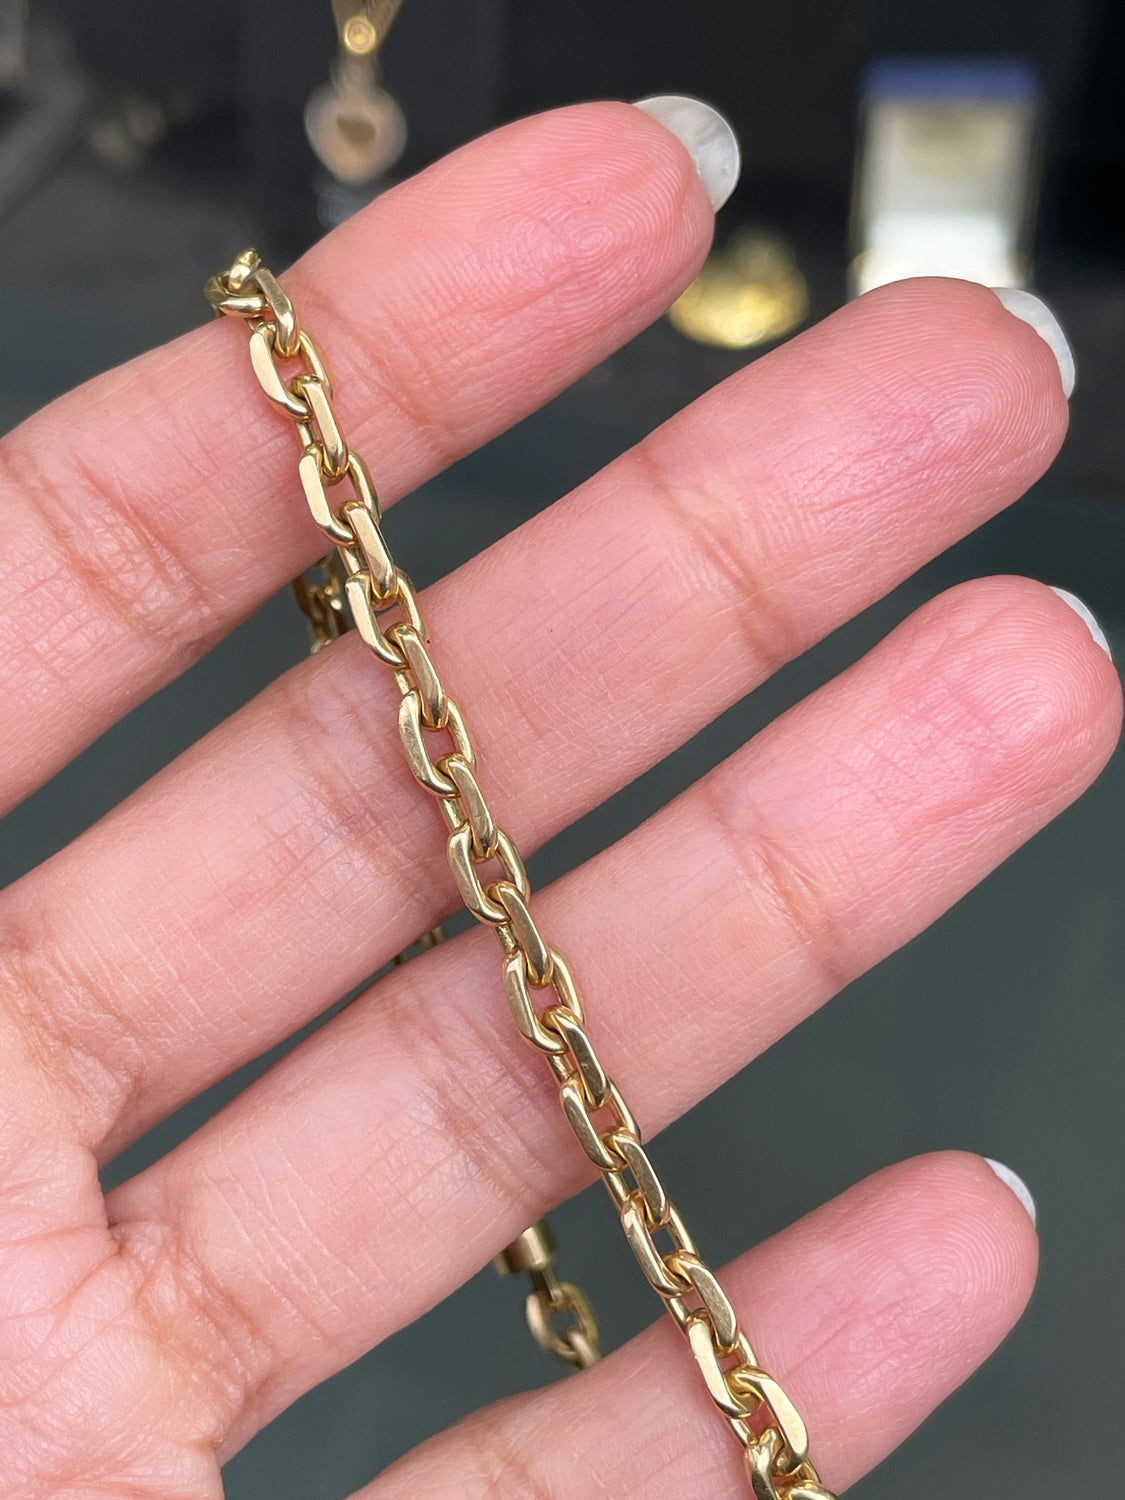 Tiffany & Co. 18 Carat Yellow Gold Belcher Link Chain Bracelet